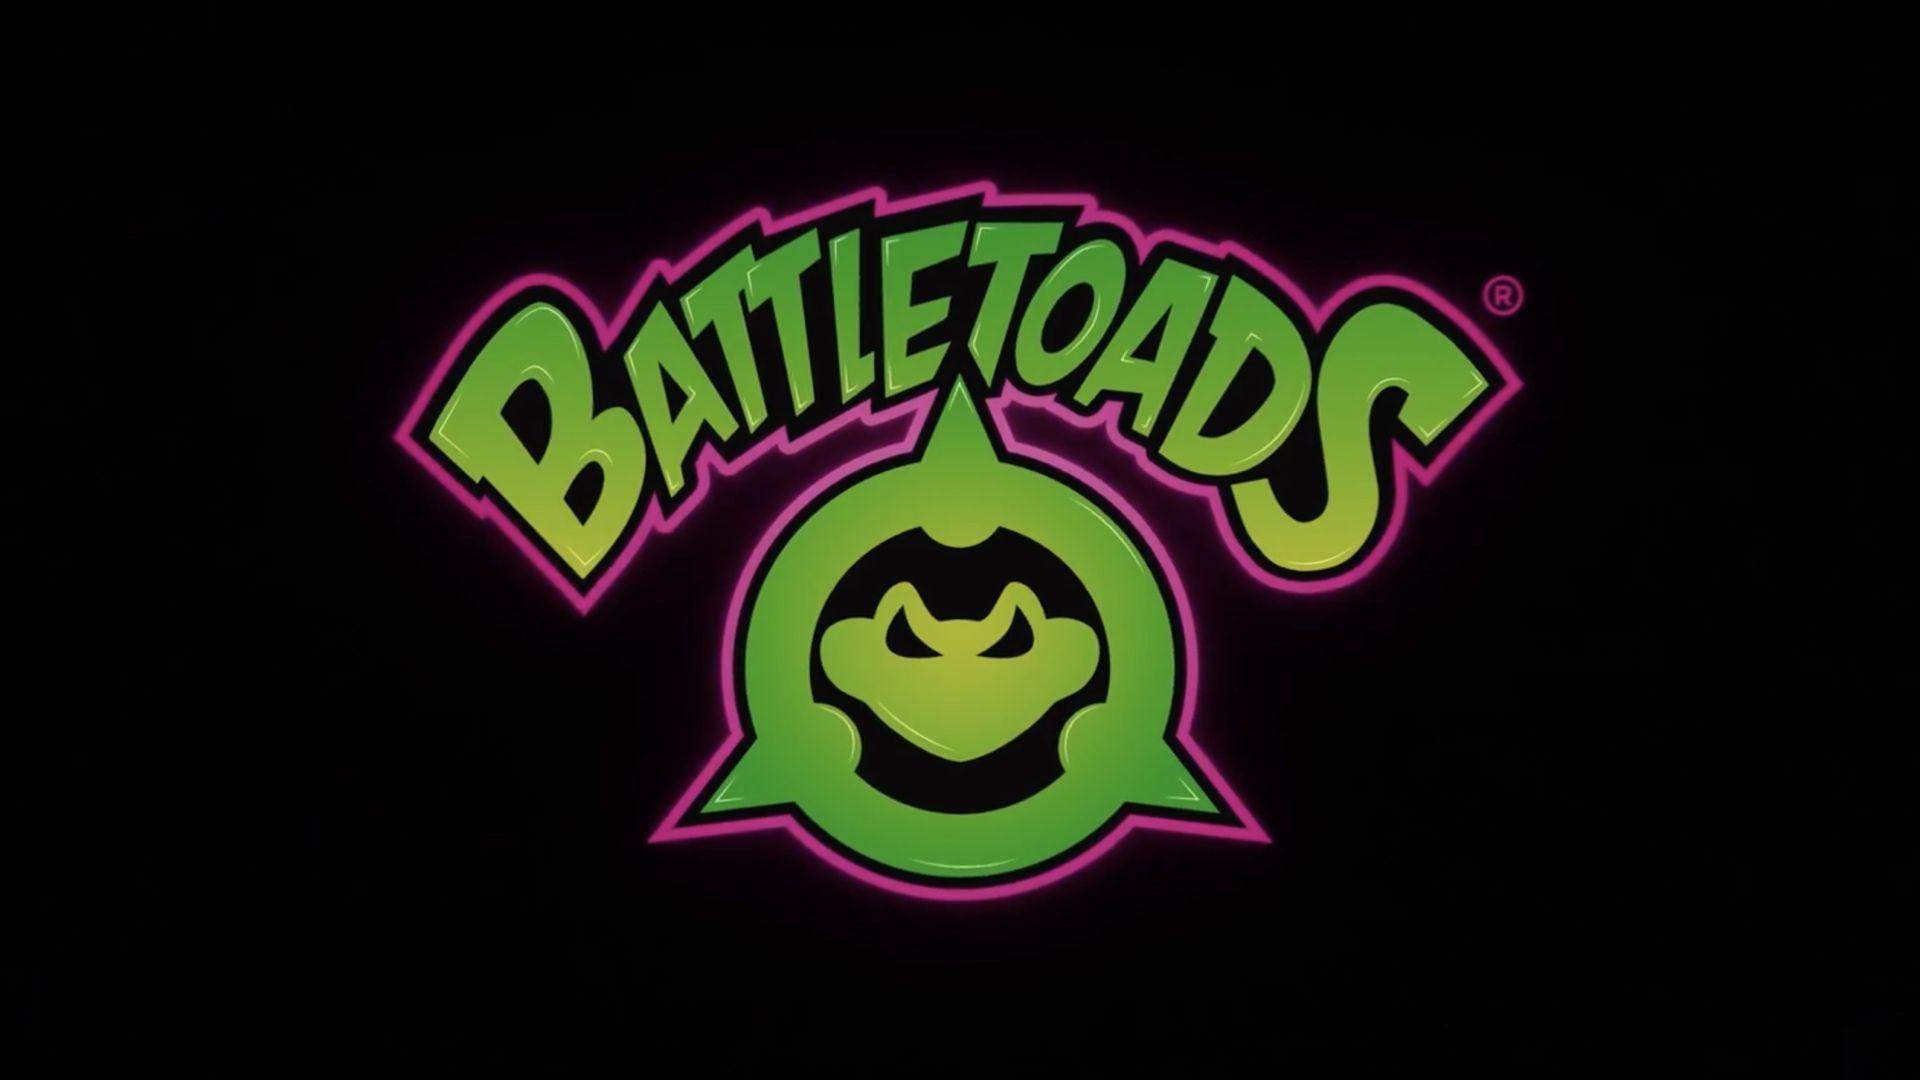 Battletoads Logo - Battletoads logo - Xbox Enthusiast